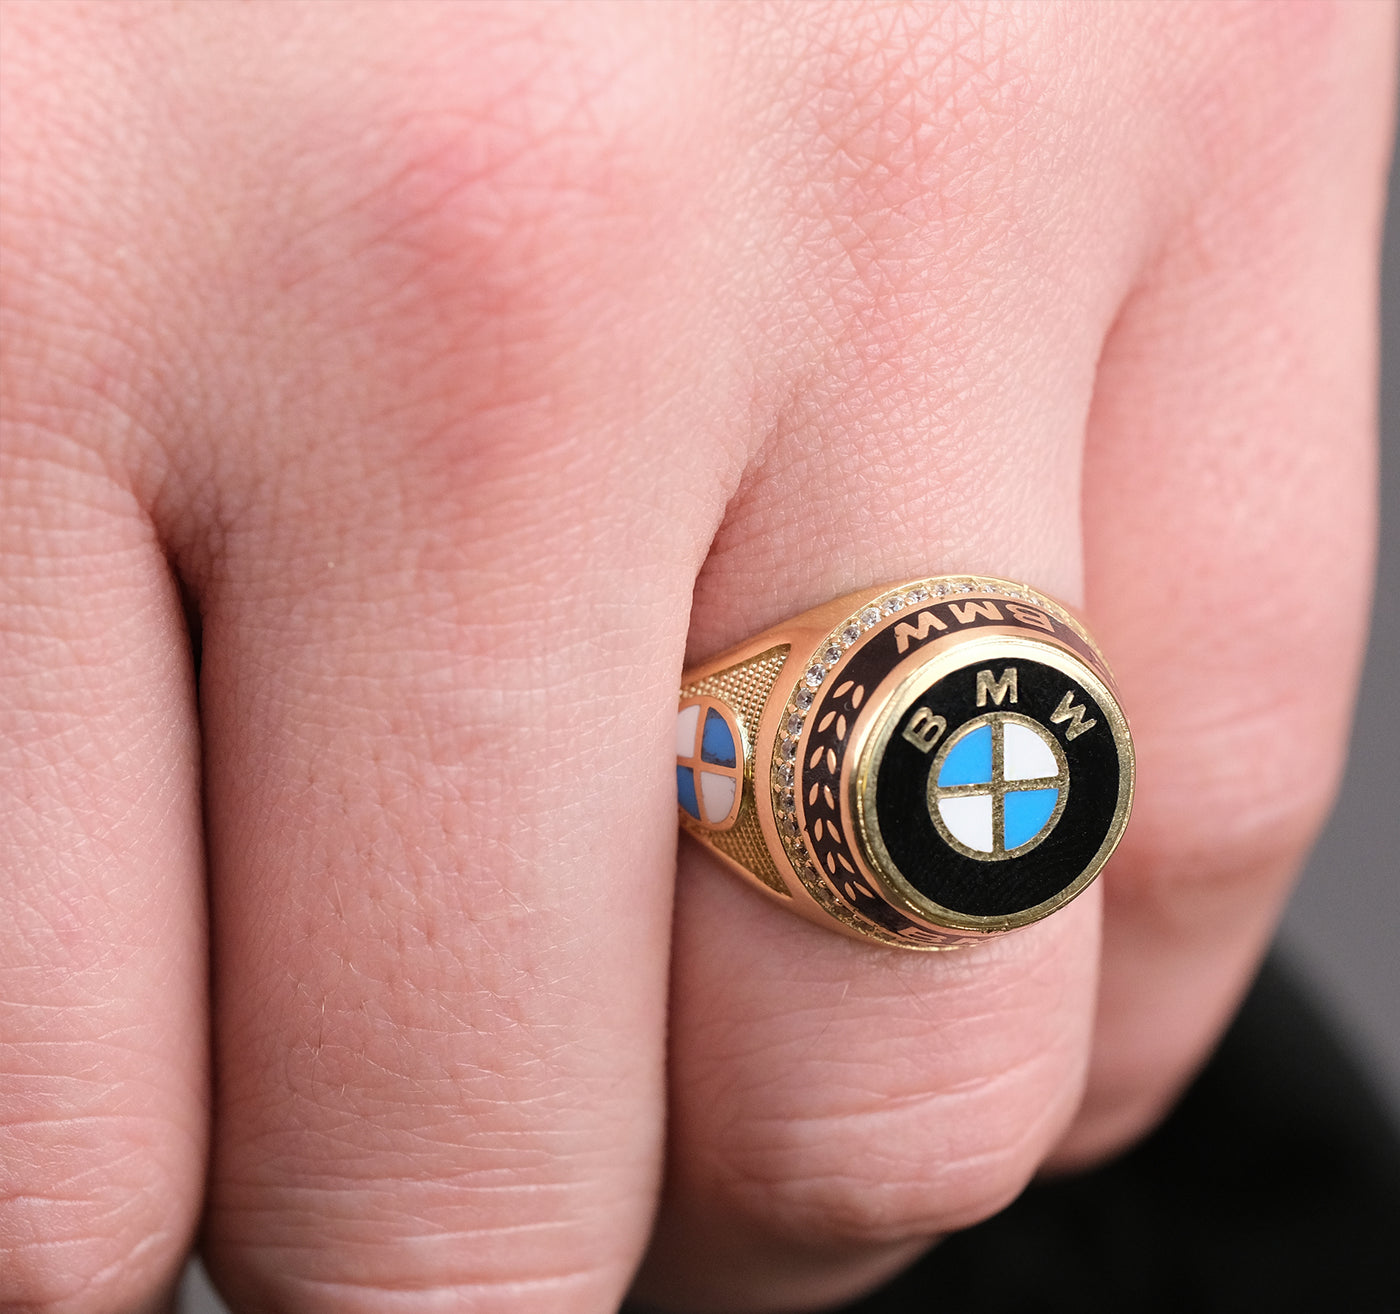 BMW Amblemli Altın Erkek Yüzüğü